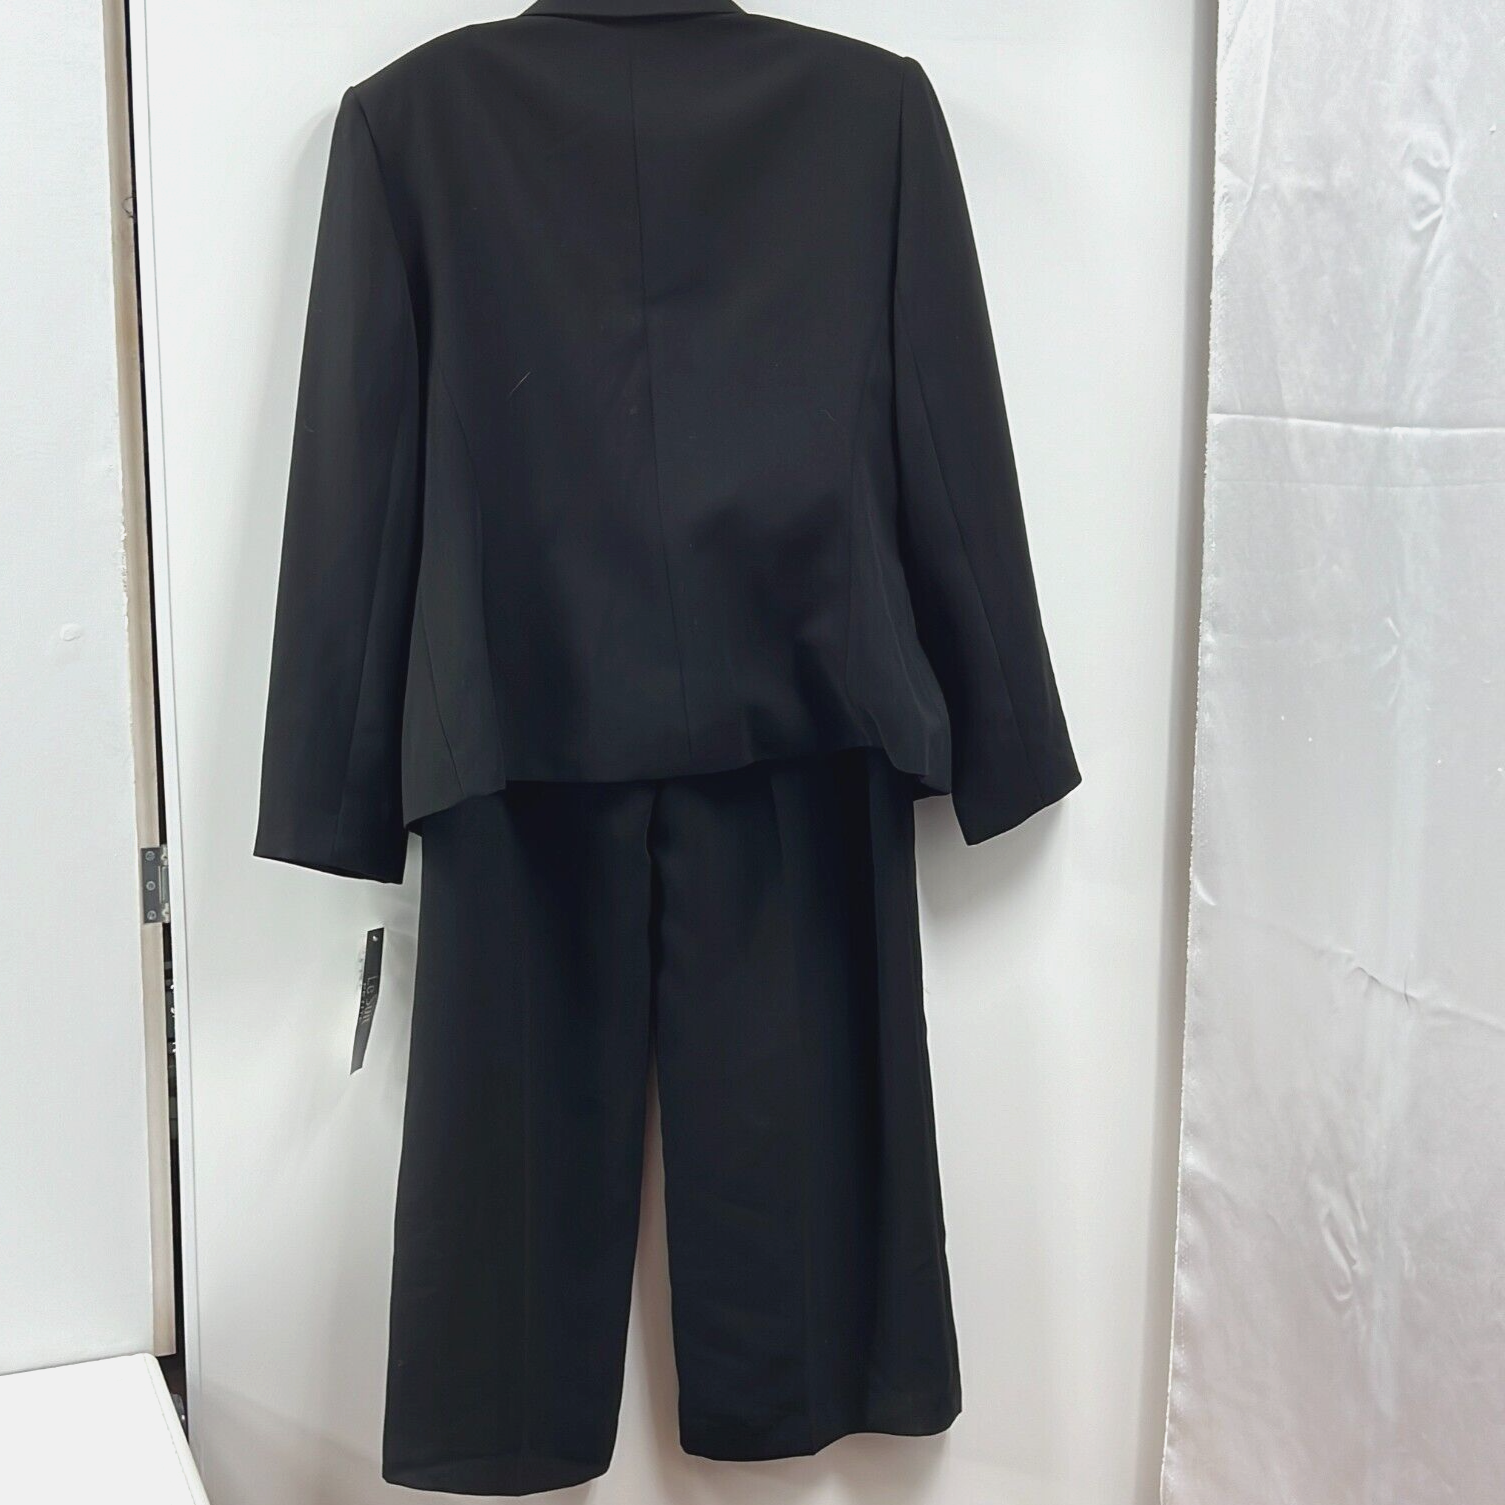 NWT Le Suit Women's Black Long Sleeve Single Breasted Two Piece Pant Suit Sz 14P